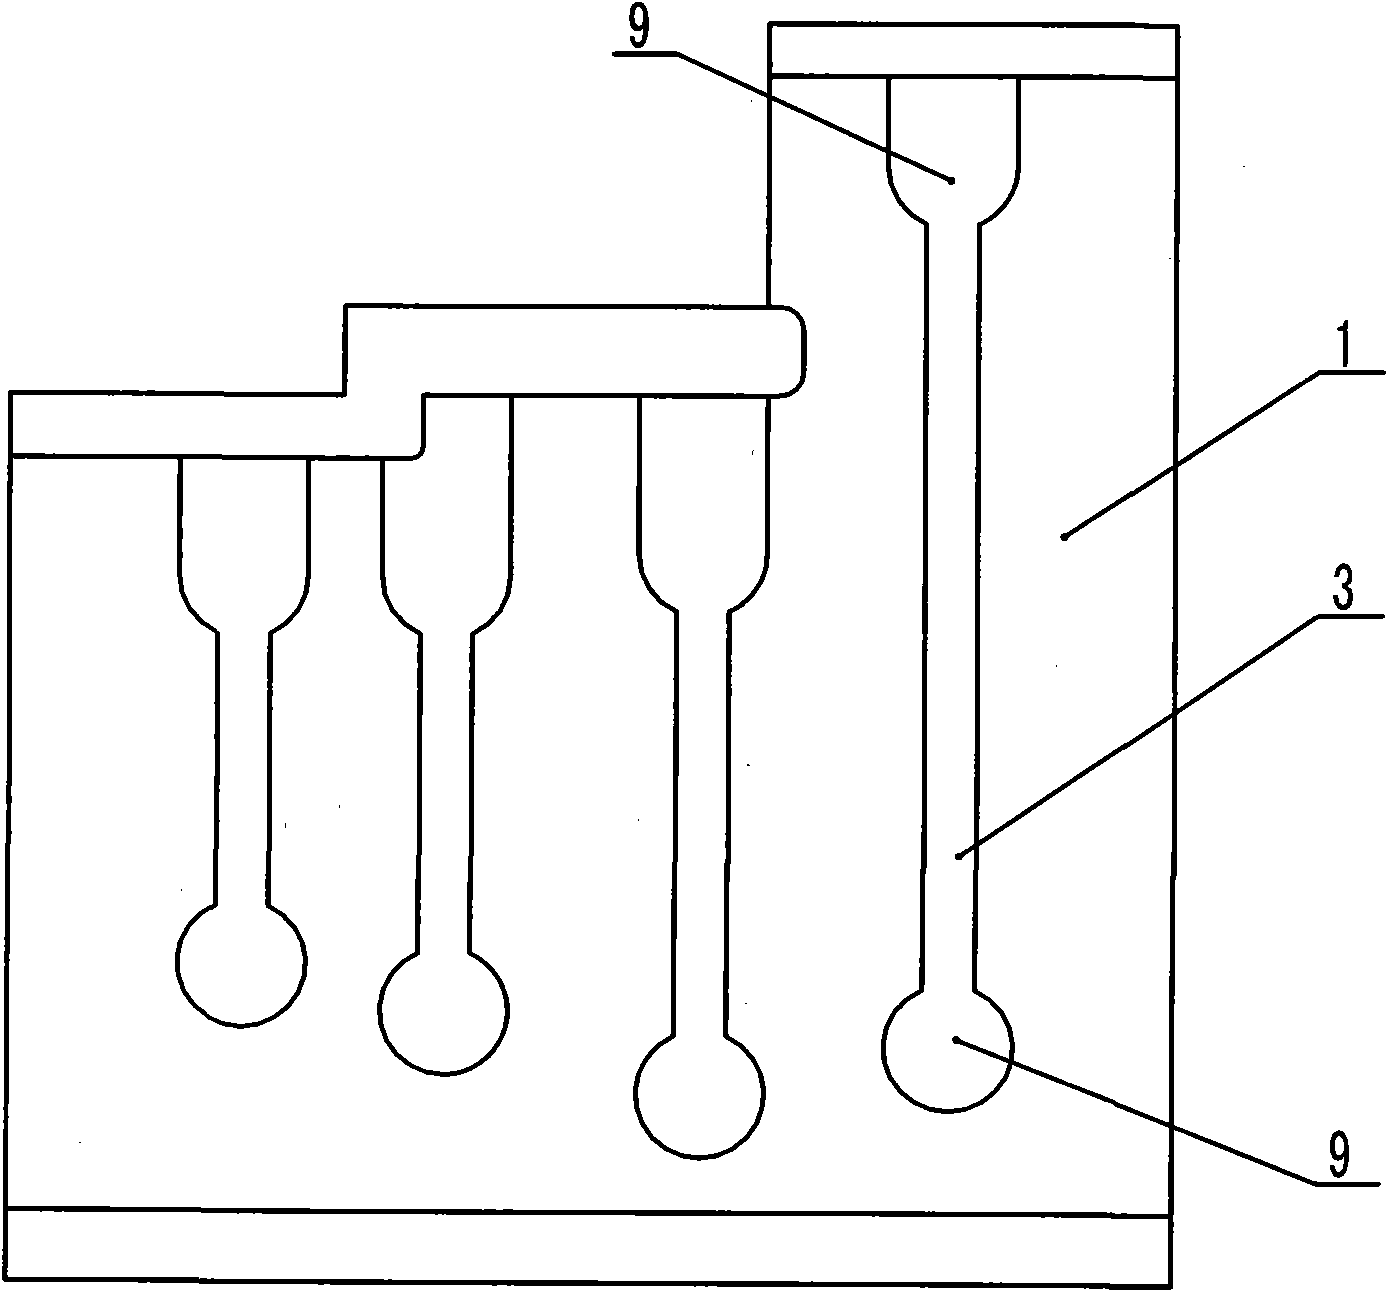 Plug dislocation interlocking apparatus used by general-purpose converter